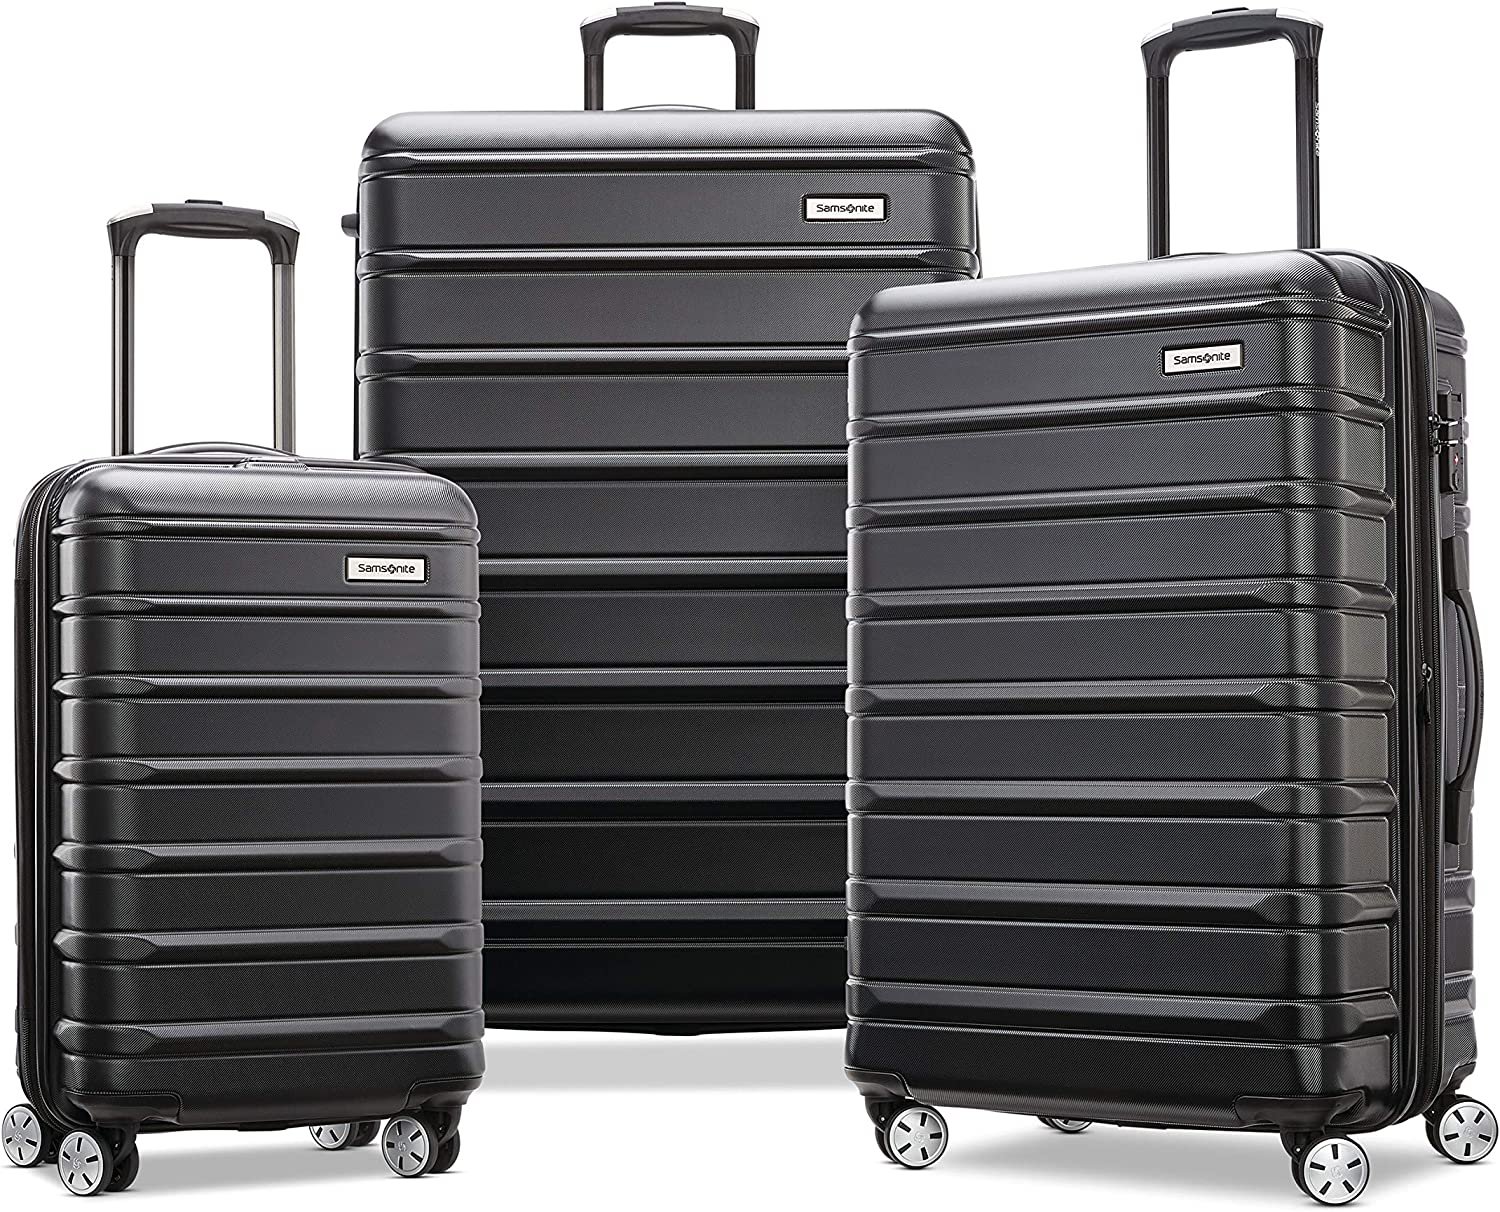 Samsonite Omni 2 Hardside Expandable Luggage with Spinner Wheels, 3-Piece Set